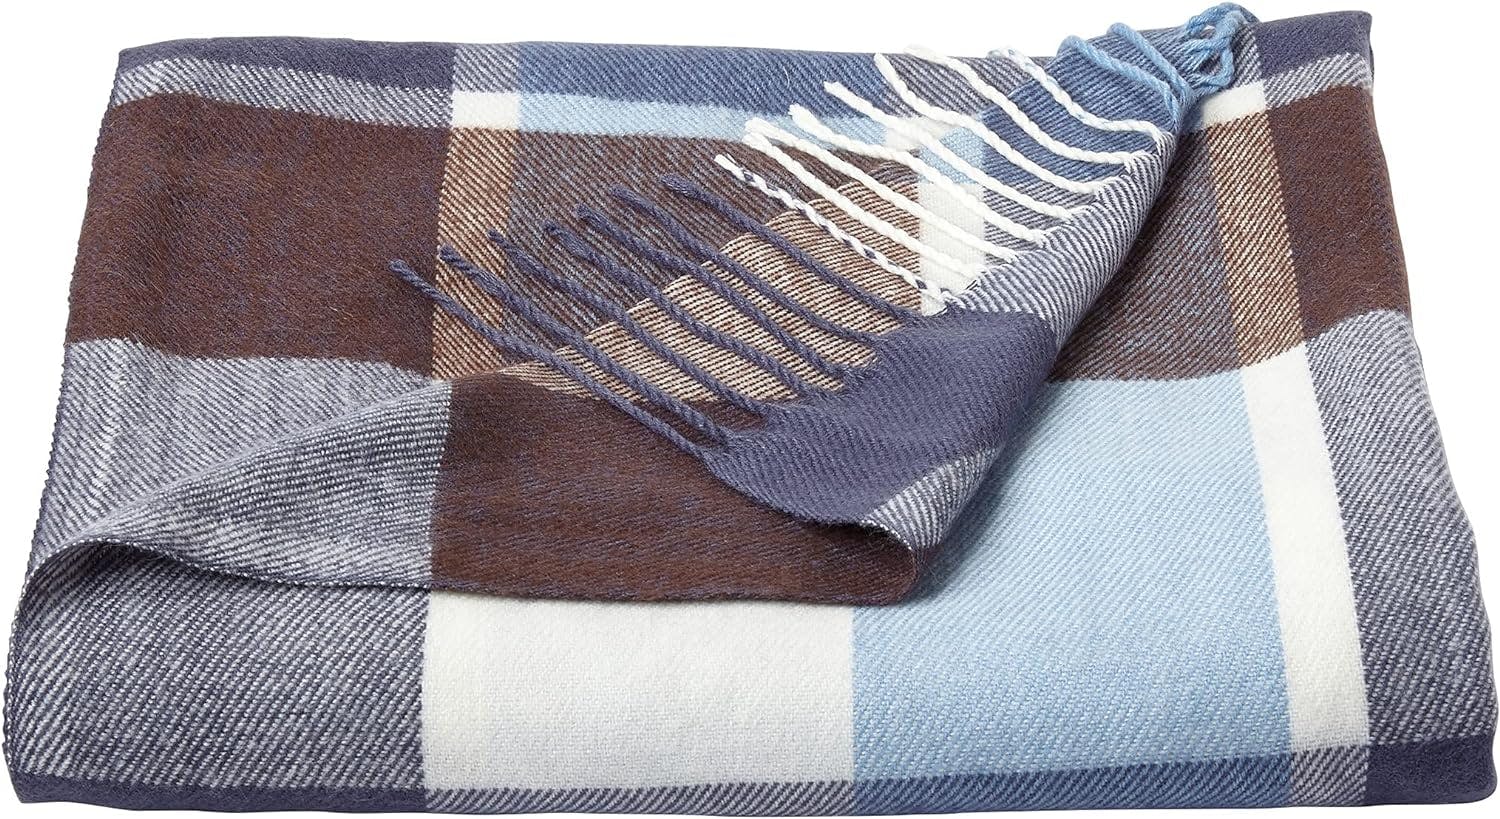 Luxurious Lightweight Wool Blend Throw Blanket in Modern Plain Style